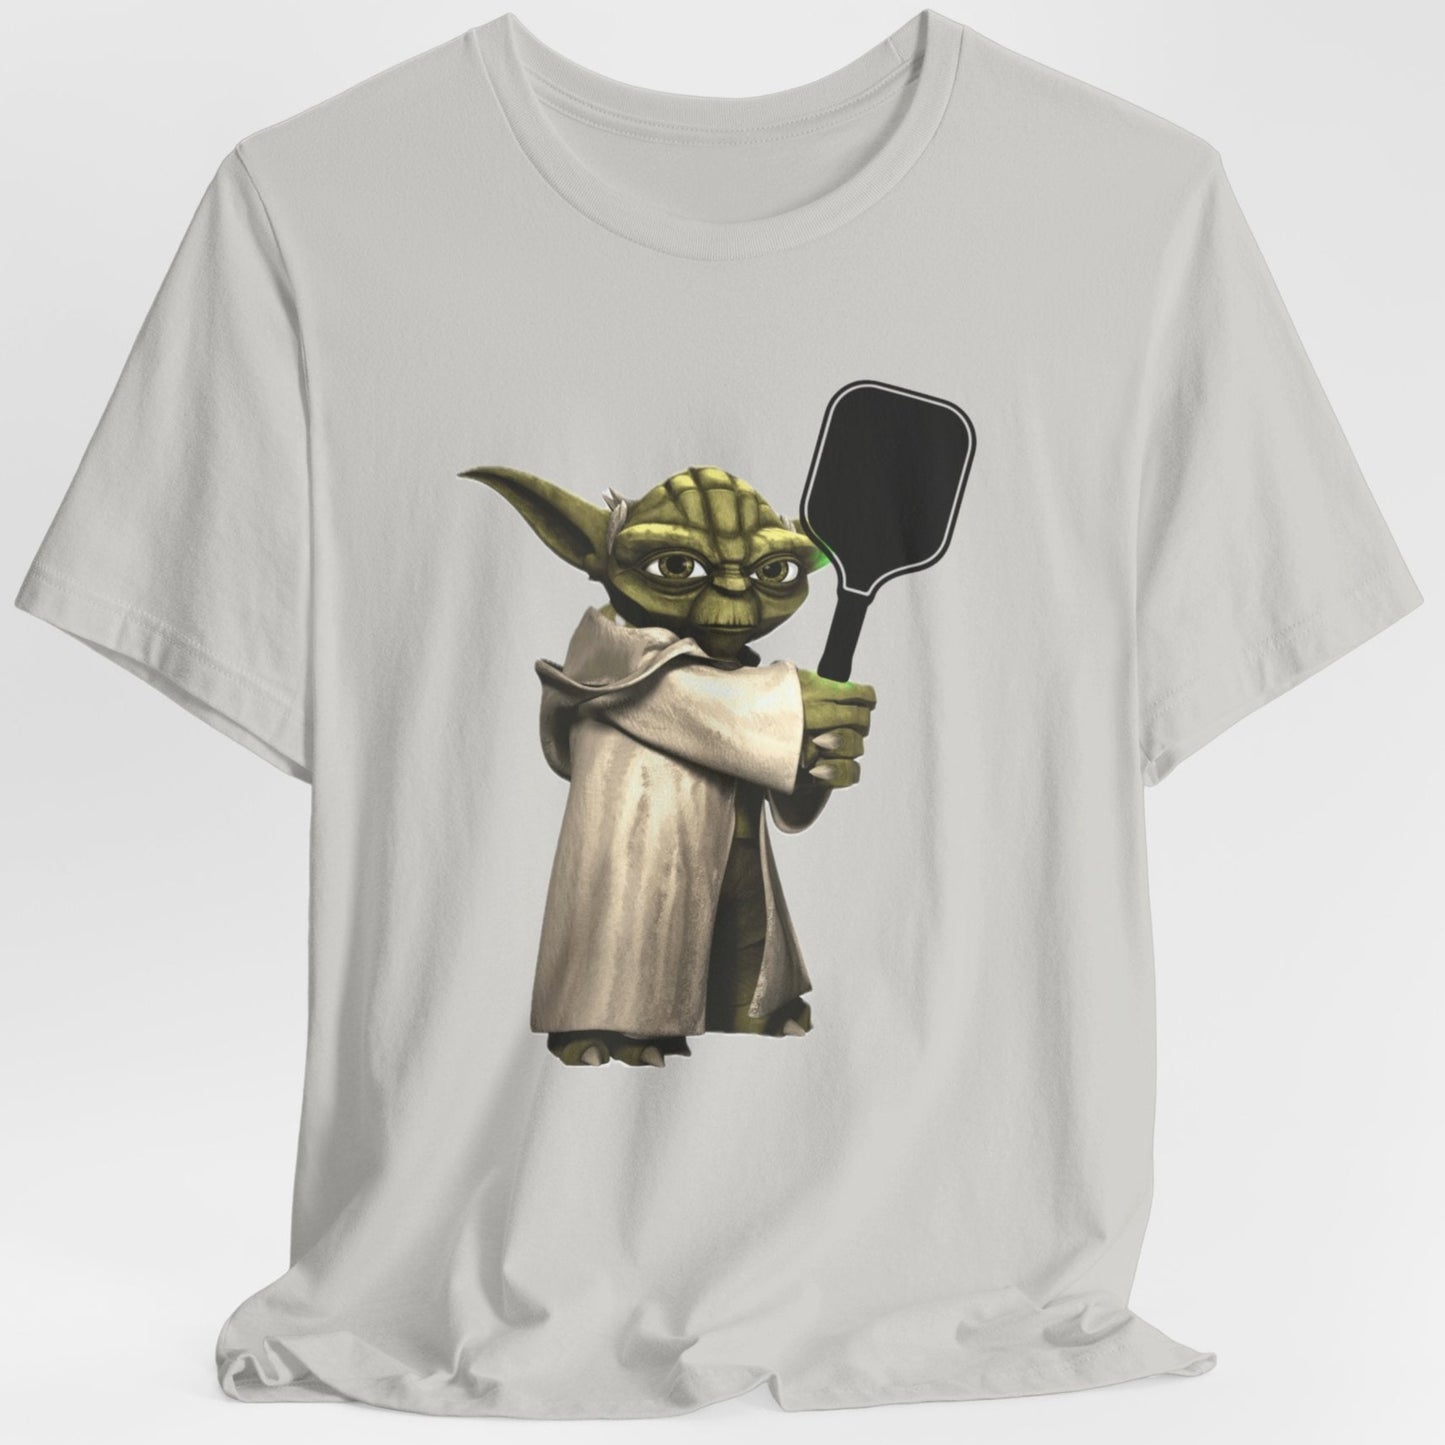 Super cool looking Pickleball Yoda Premium Funny Star Wars Return of the Jedi Picklelball T-Shirt